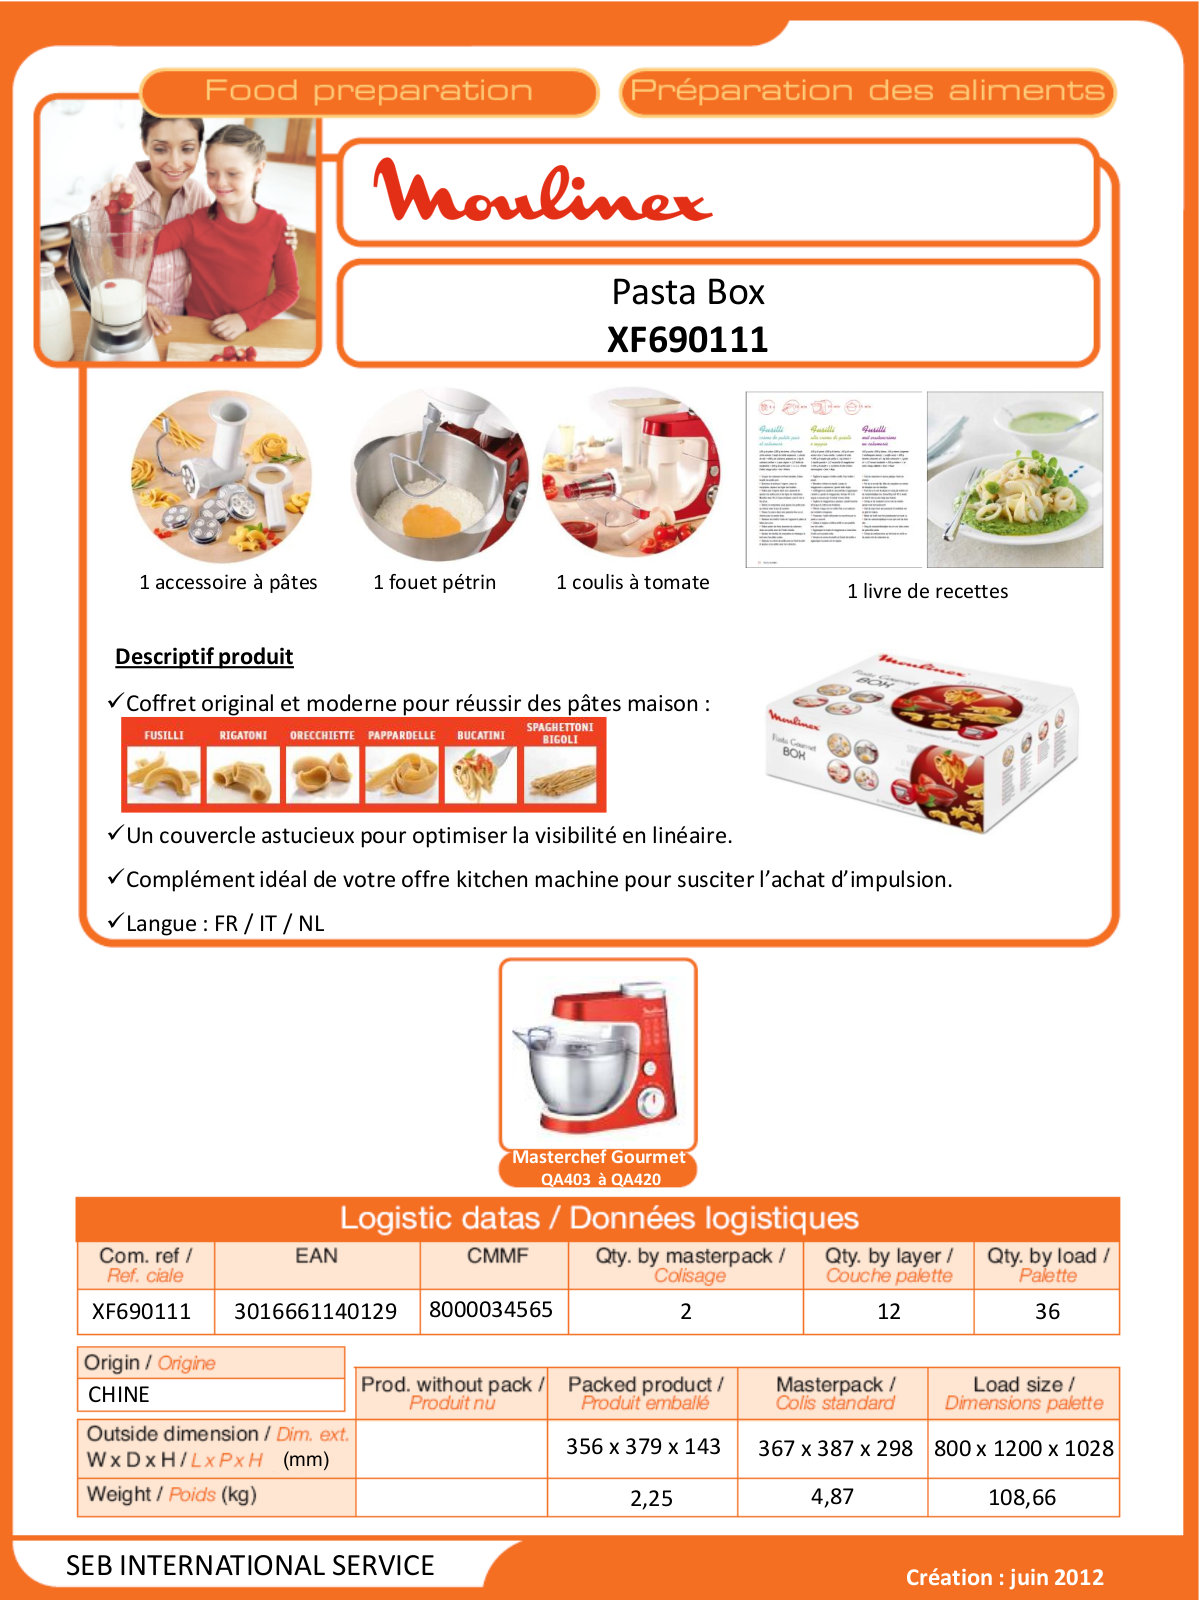 Moulinex Masterchef product sheet